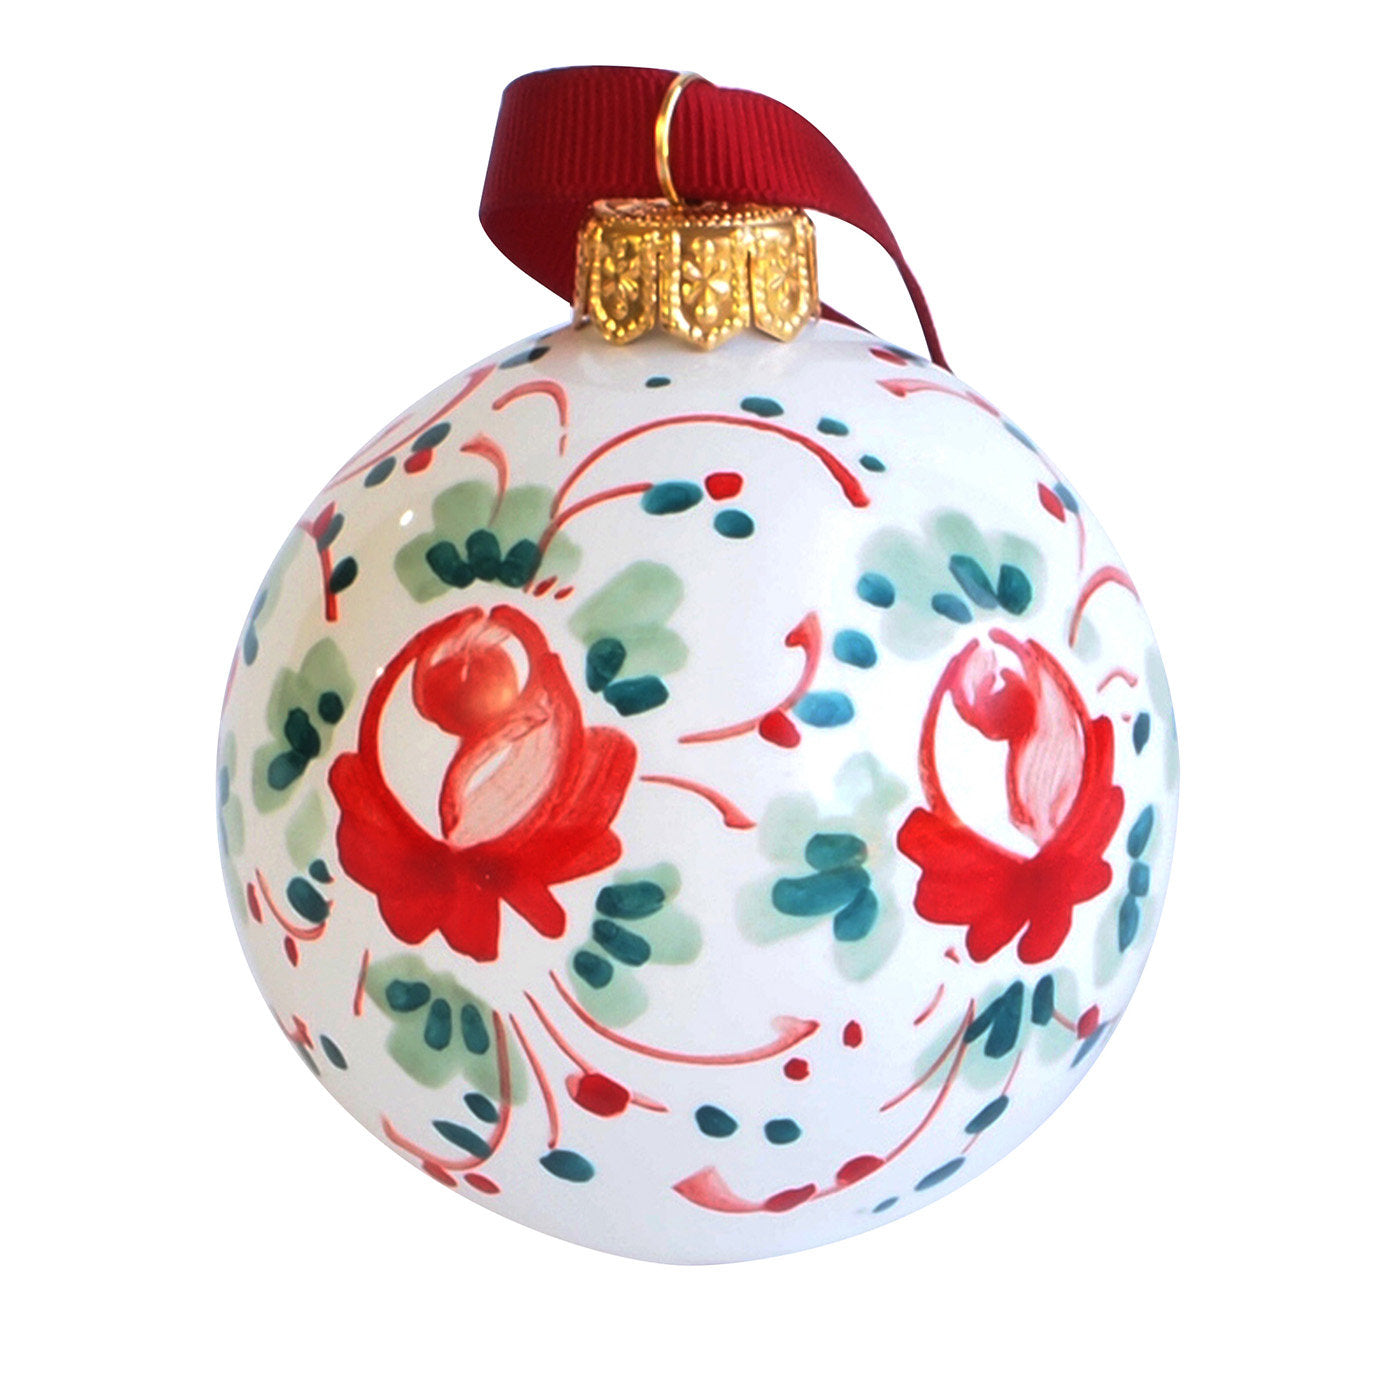 Multicolor Floral Weihnachtskugel Ornament #2 - Hauptansicht